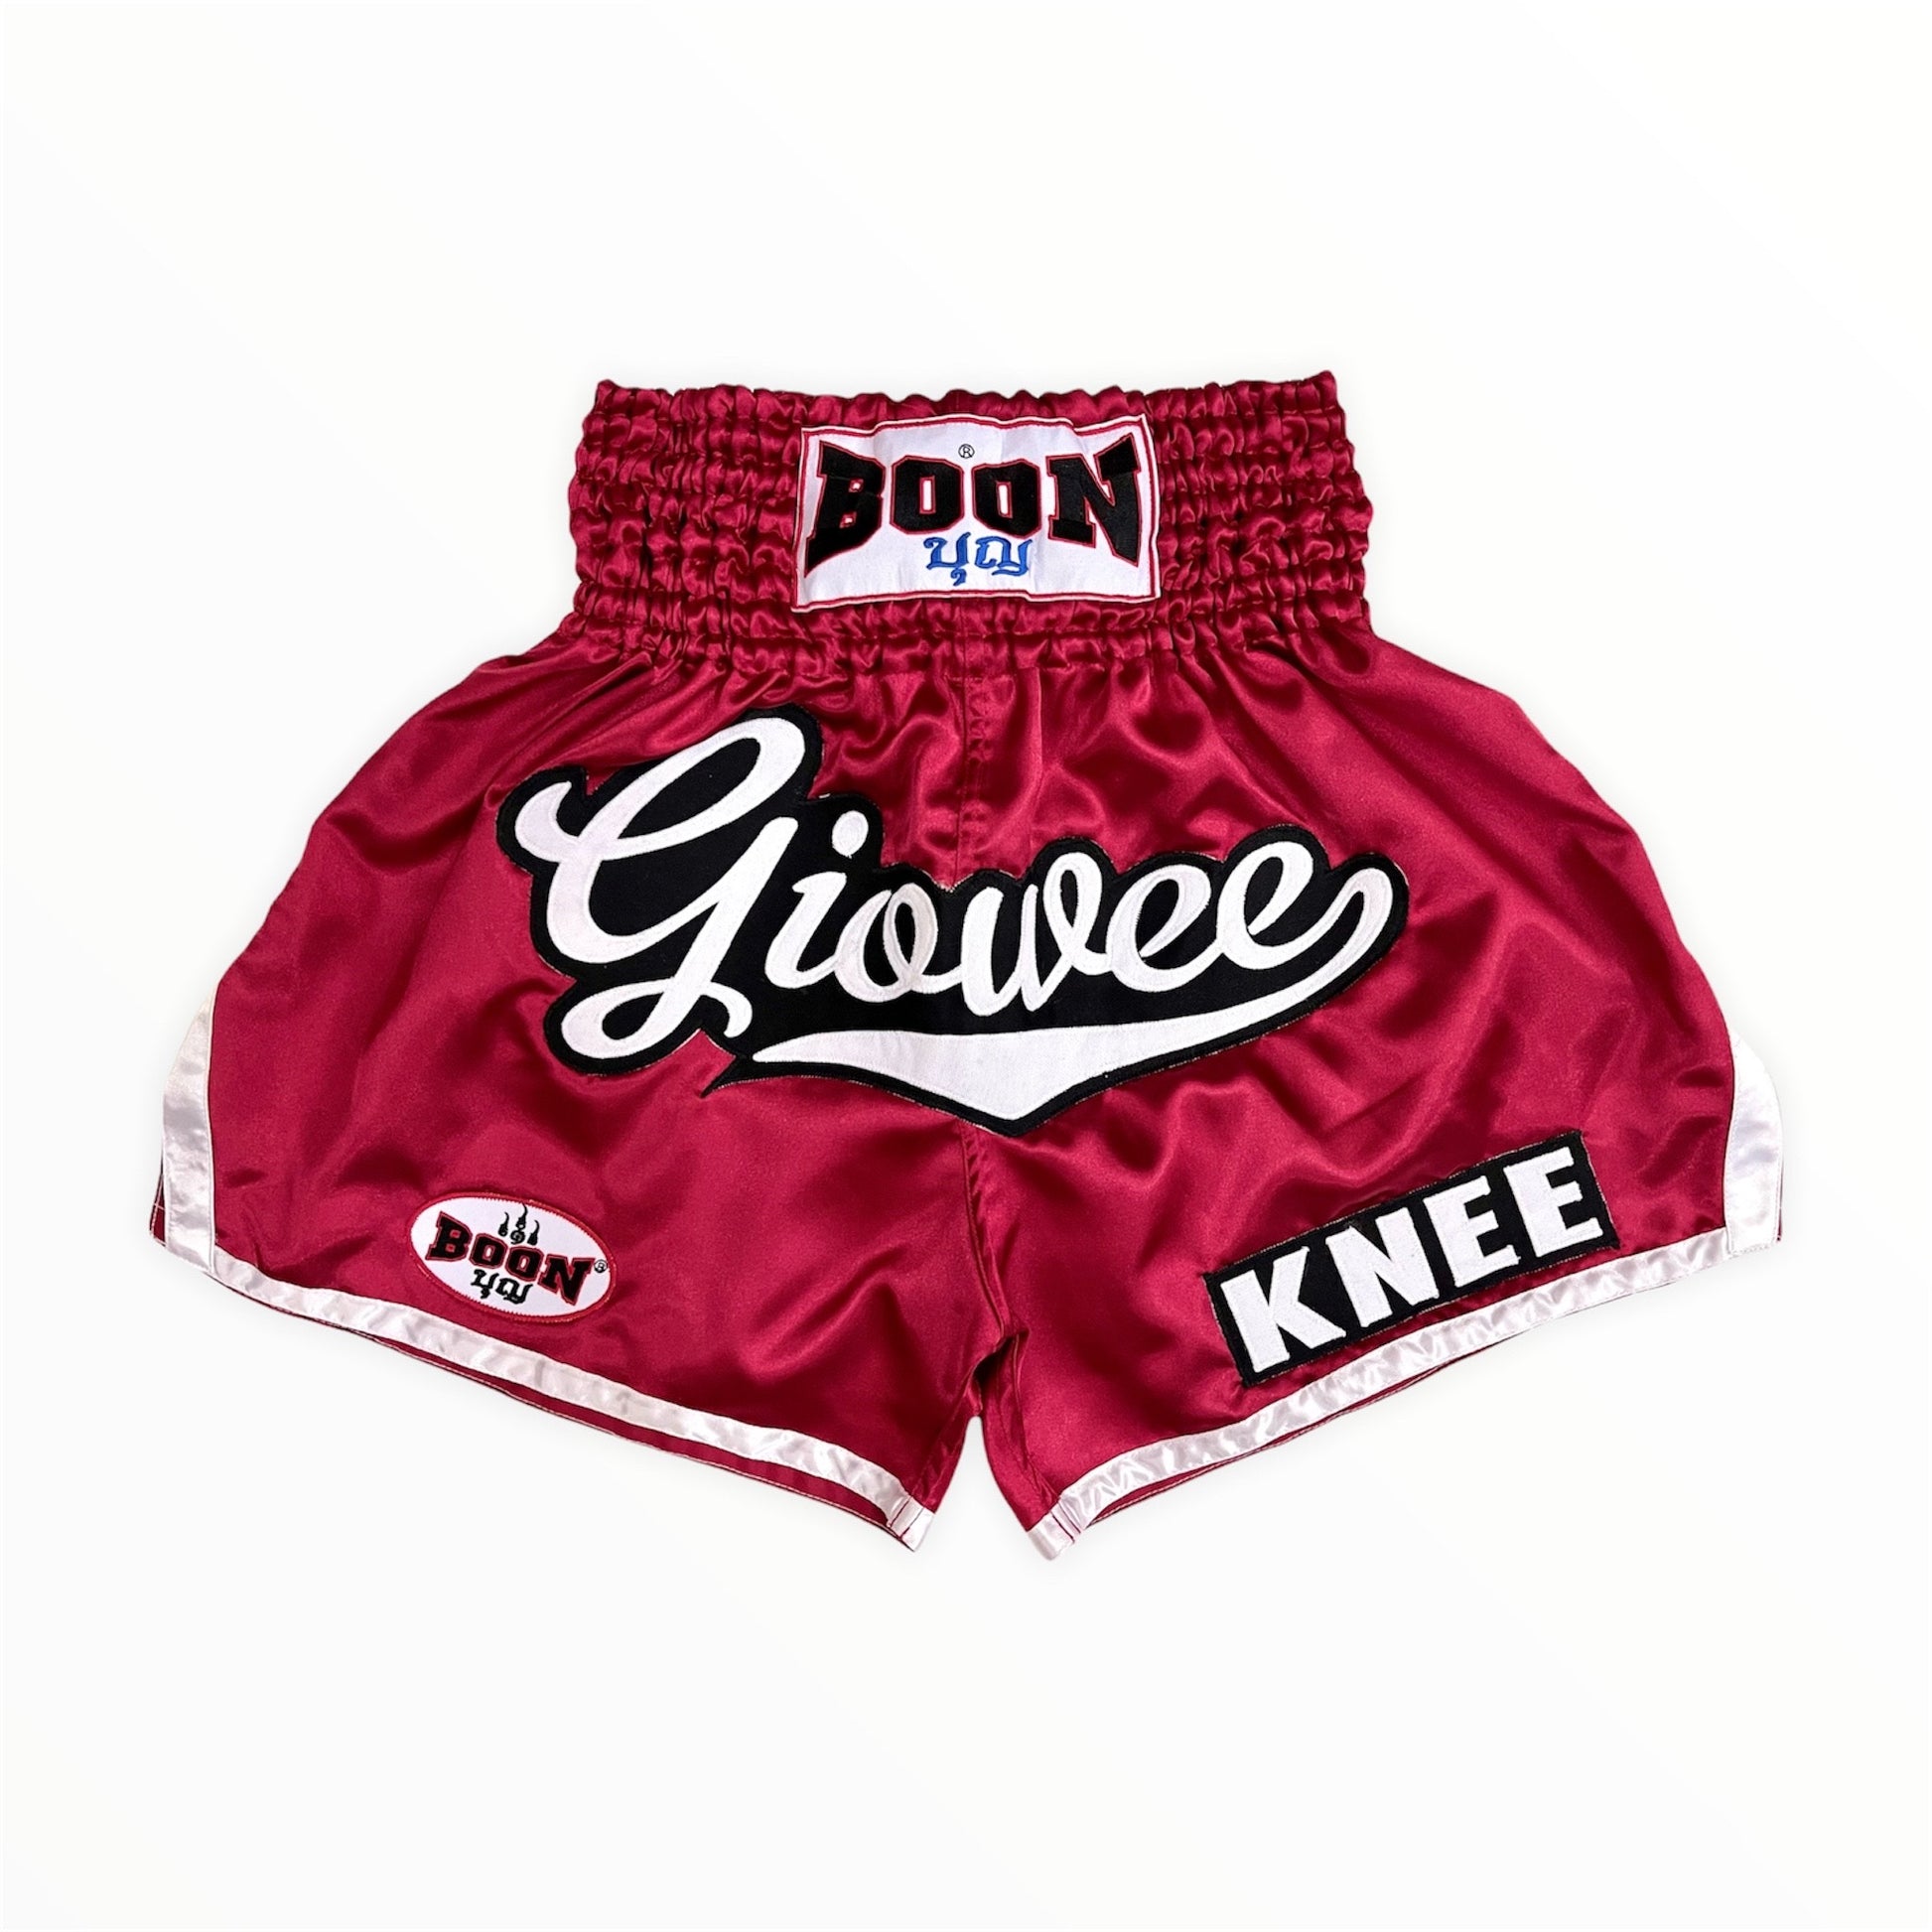 Custom Boxing Shorts – BOON Sport